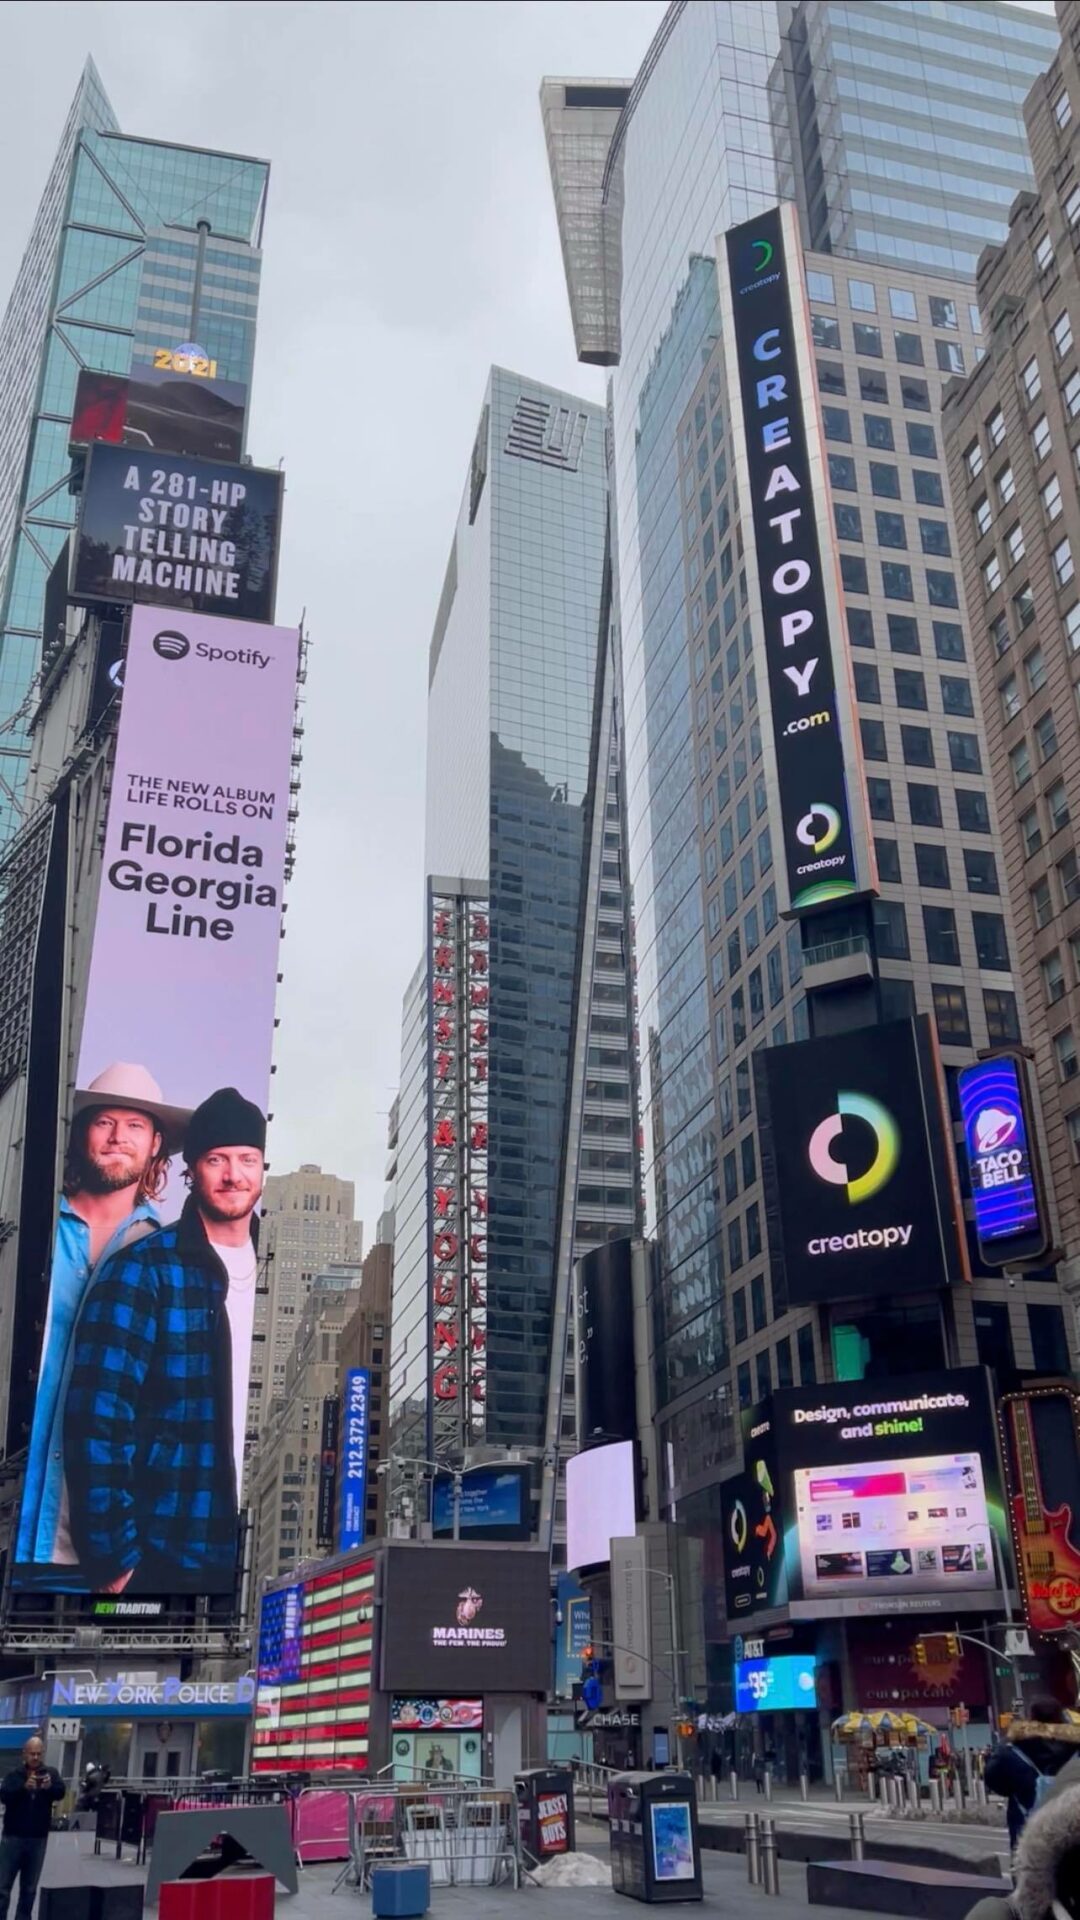 Times Square New York - Thomson Reuters billboard